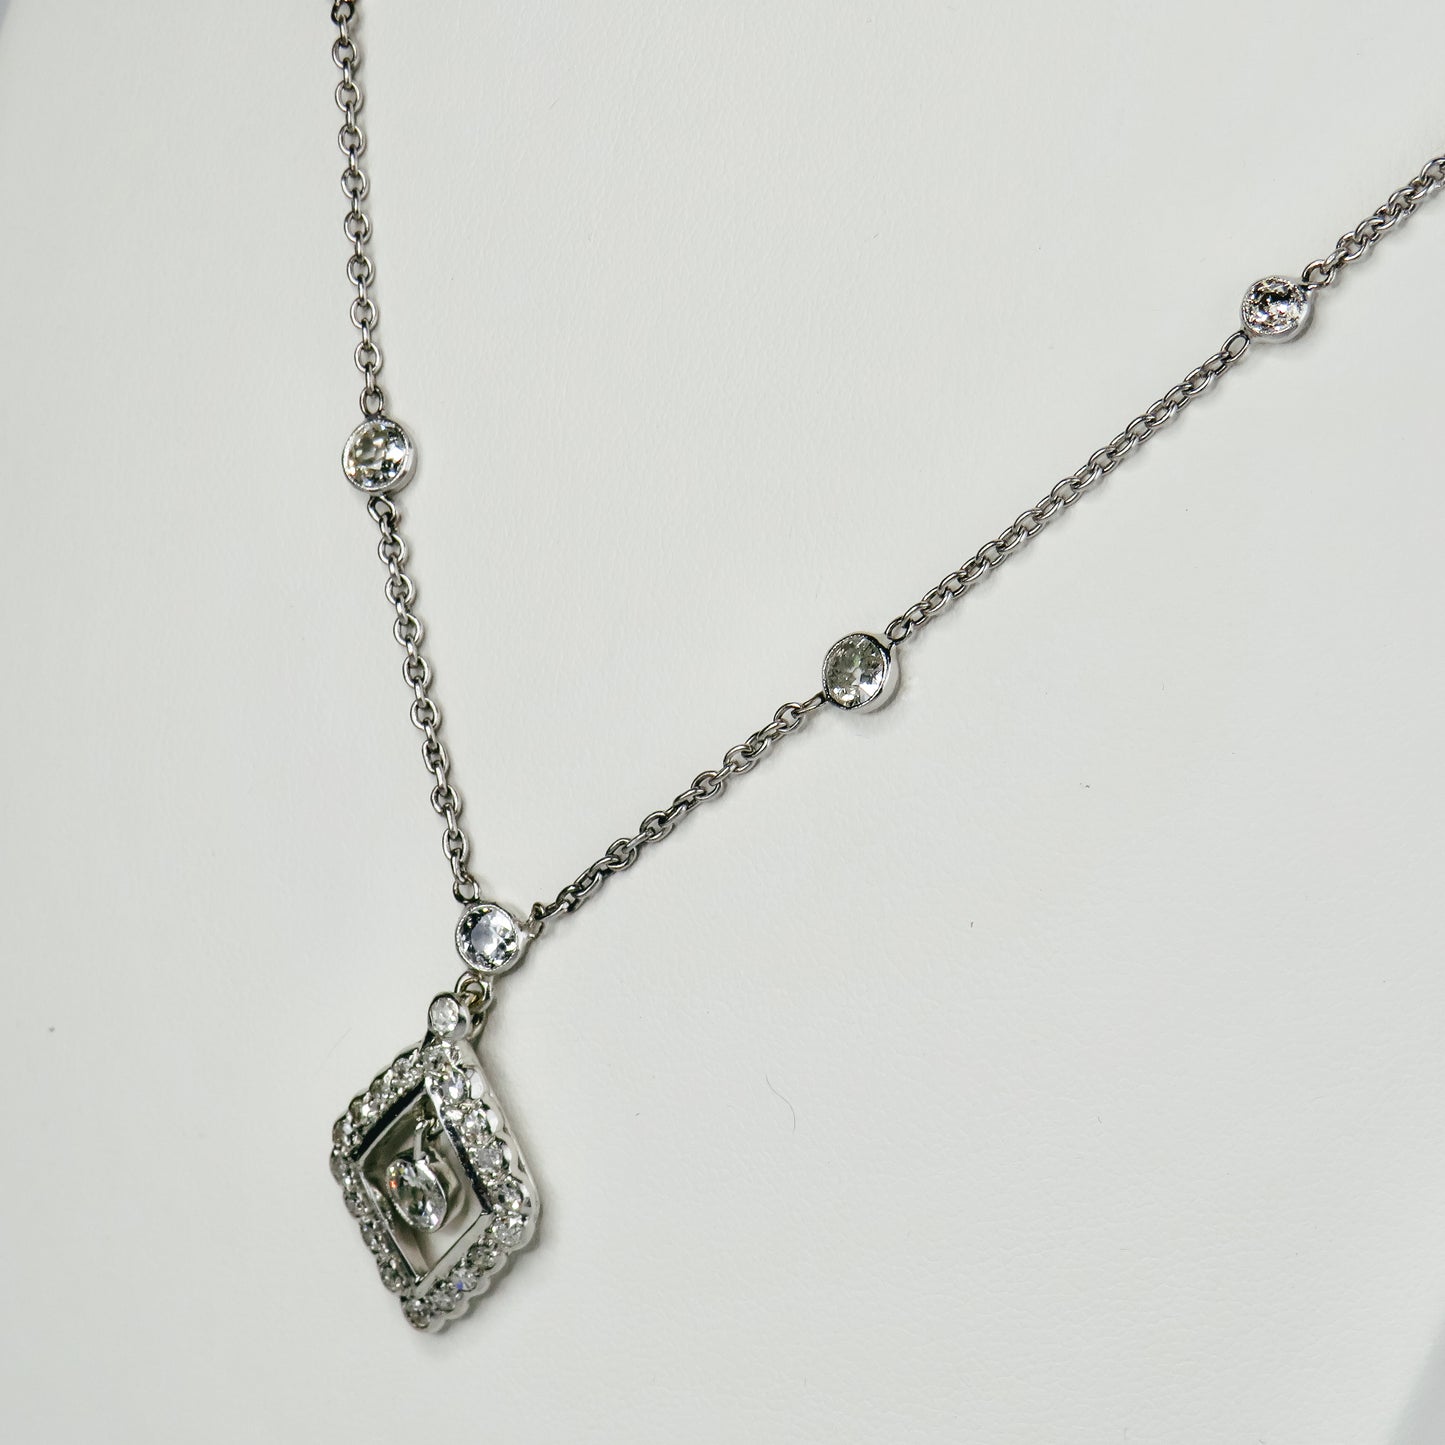 Art Deco Diamant chain made of white gold